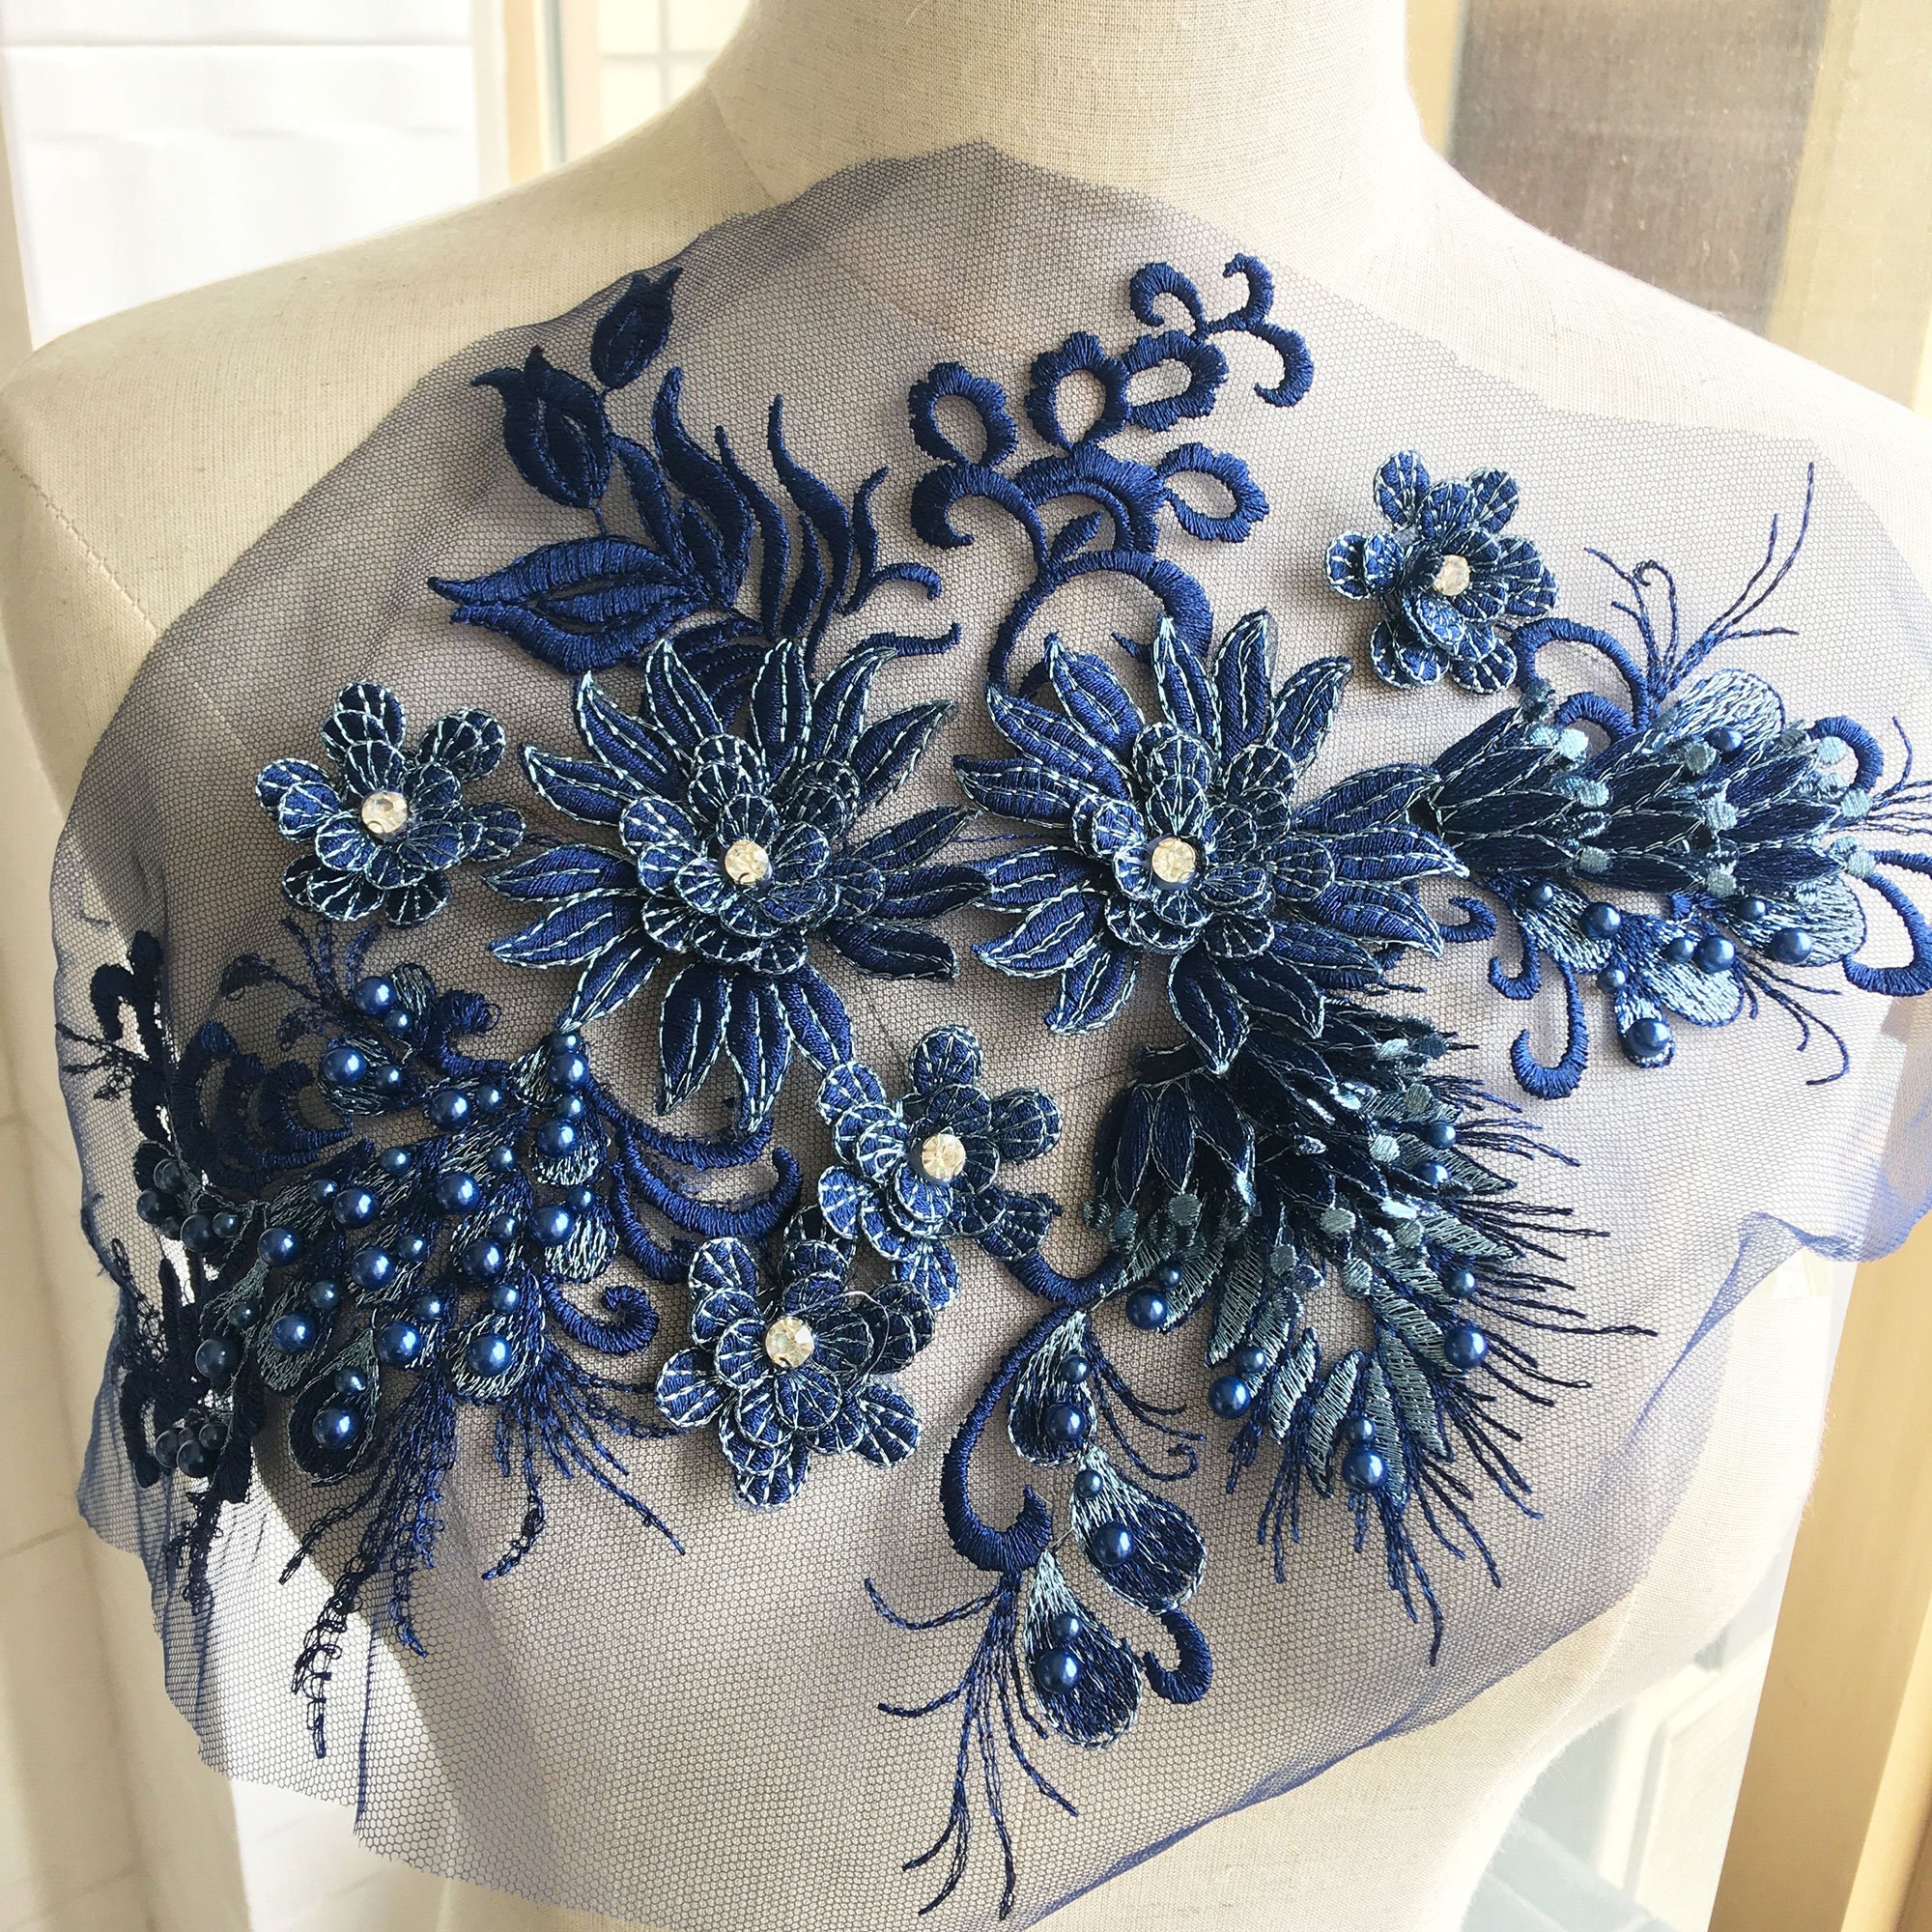 3D Floral Lace Applique Motif Materials With Diamante Pearl | Etsy